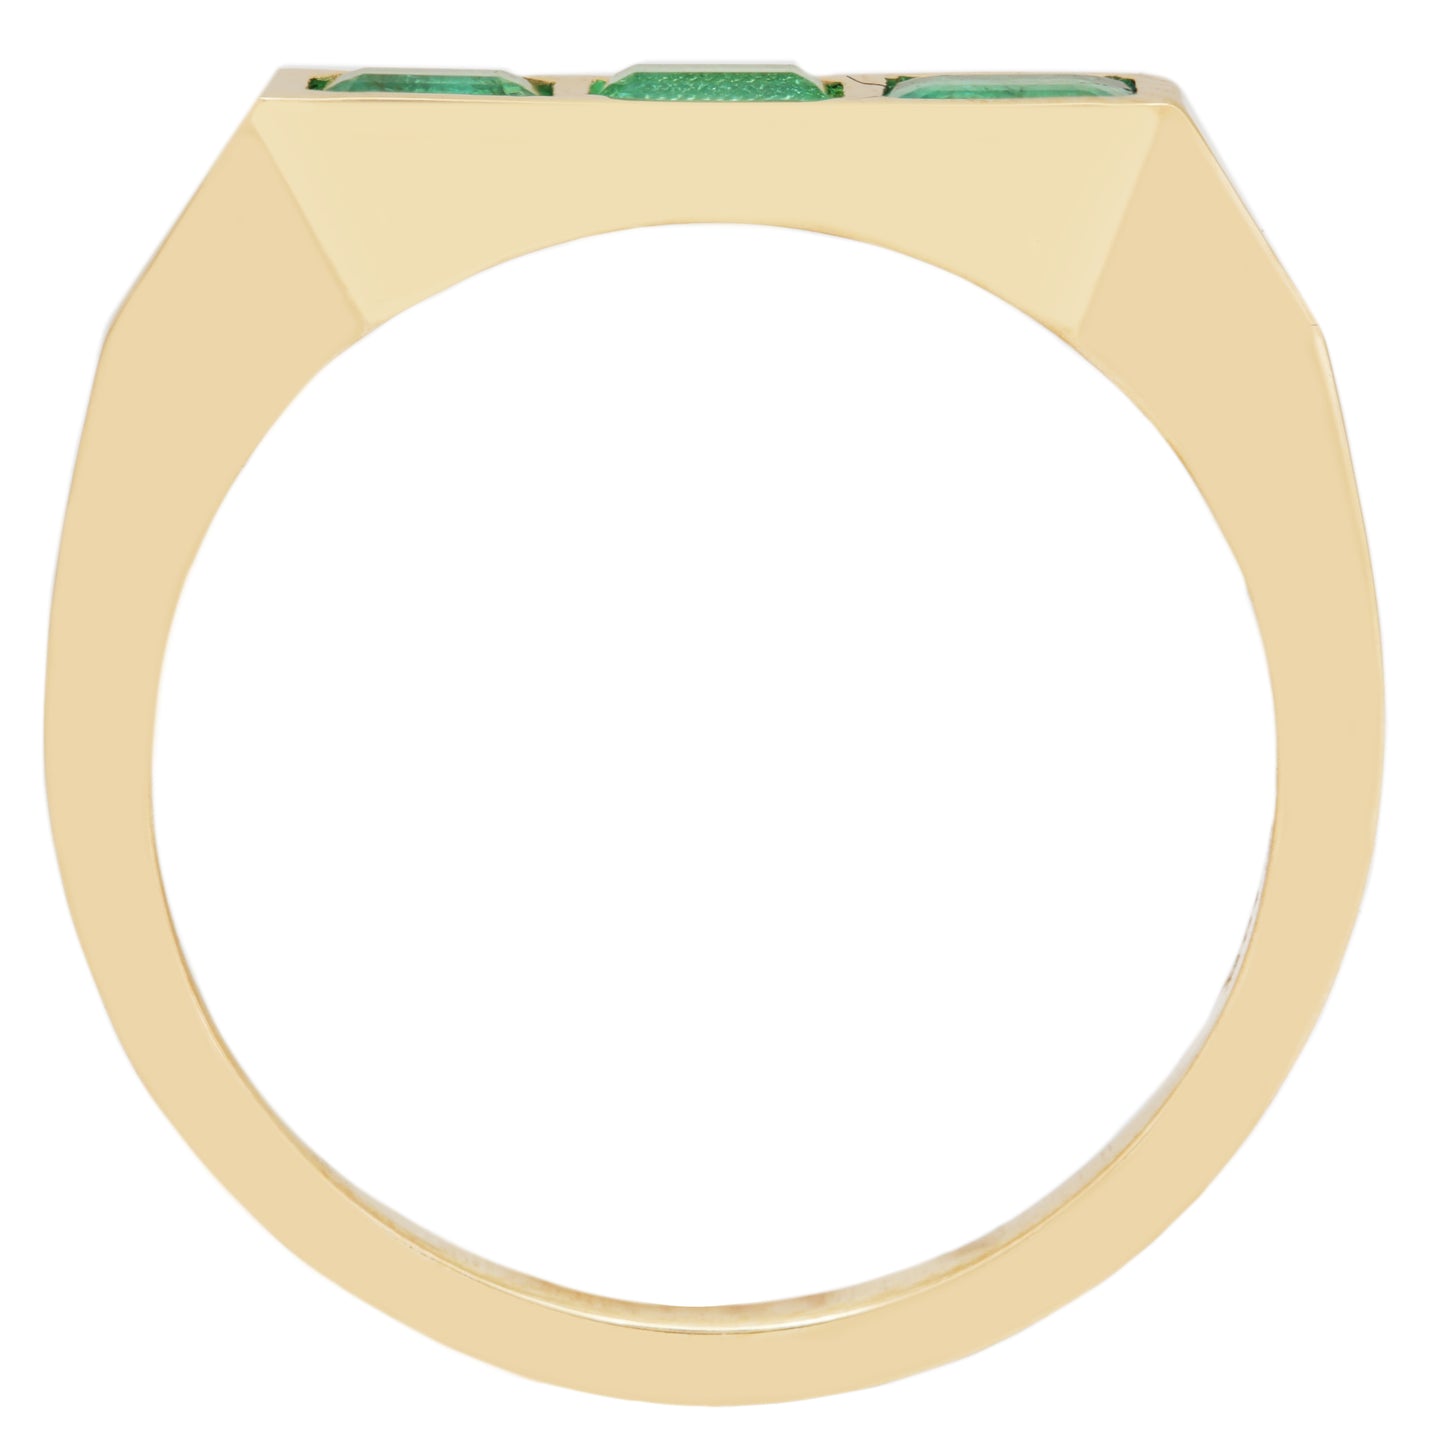 Emerald Guardian Bar Ring